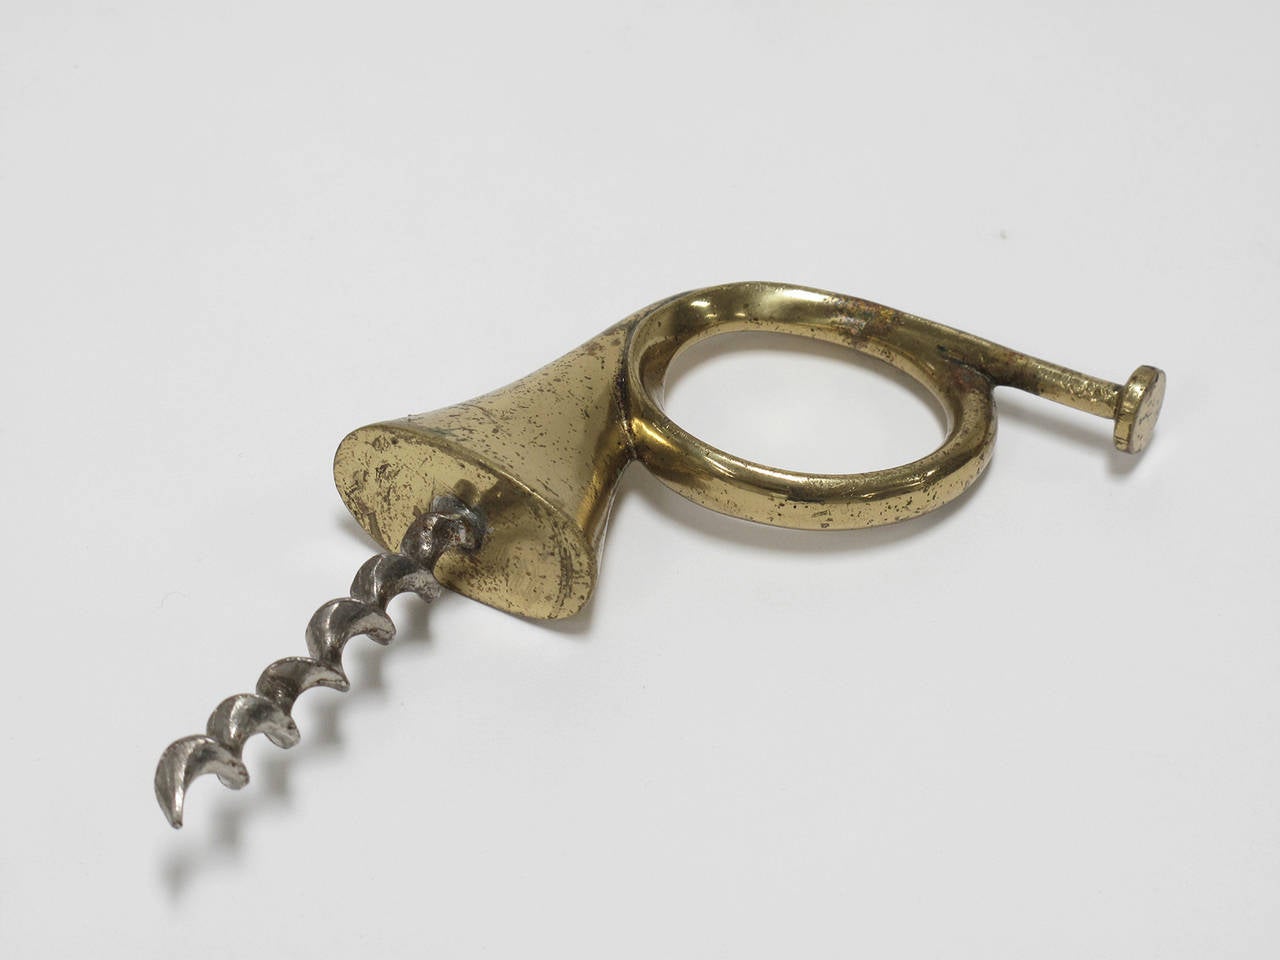 Carl Auböck
objet d'art barware tool corkscrew formed in the shape of a horn.
Austria Modern, 1950s.
Werkstätte Auböck.
Brass, solid cast,
unsigned.